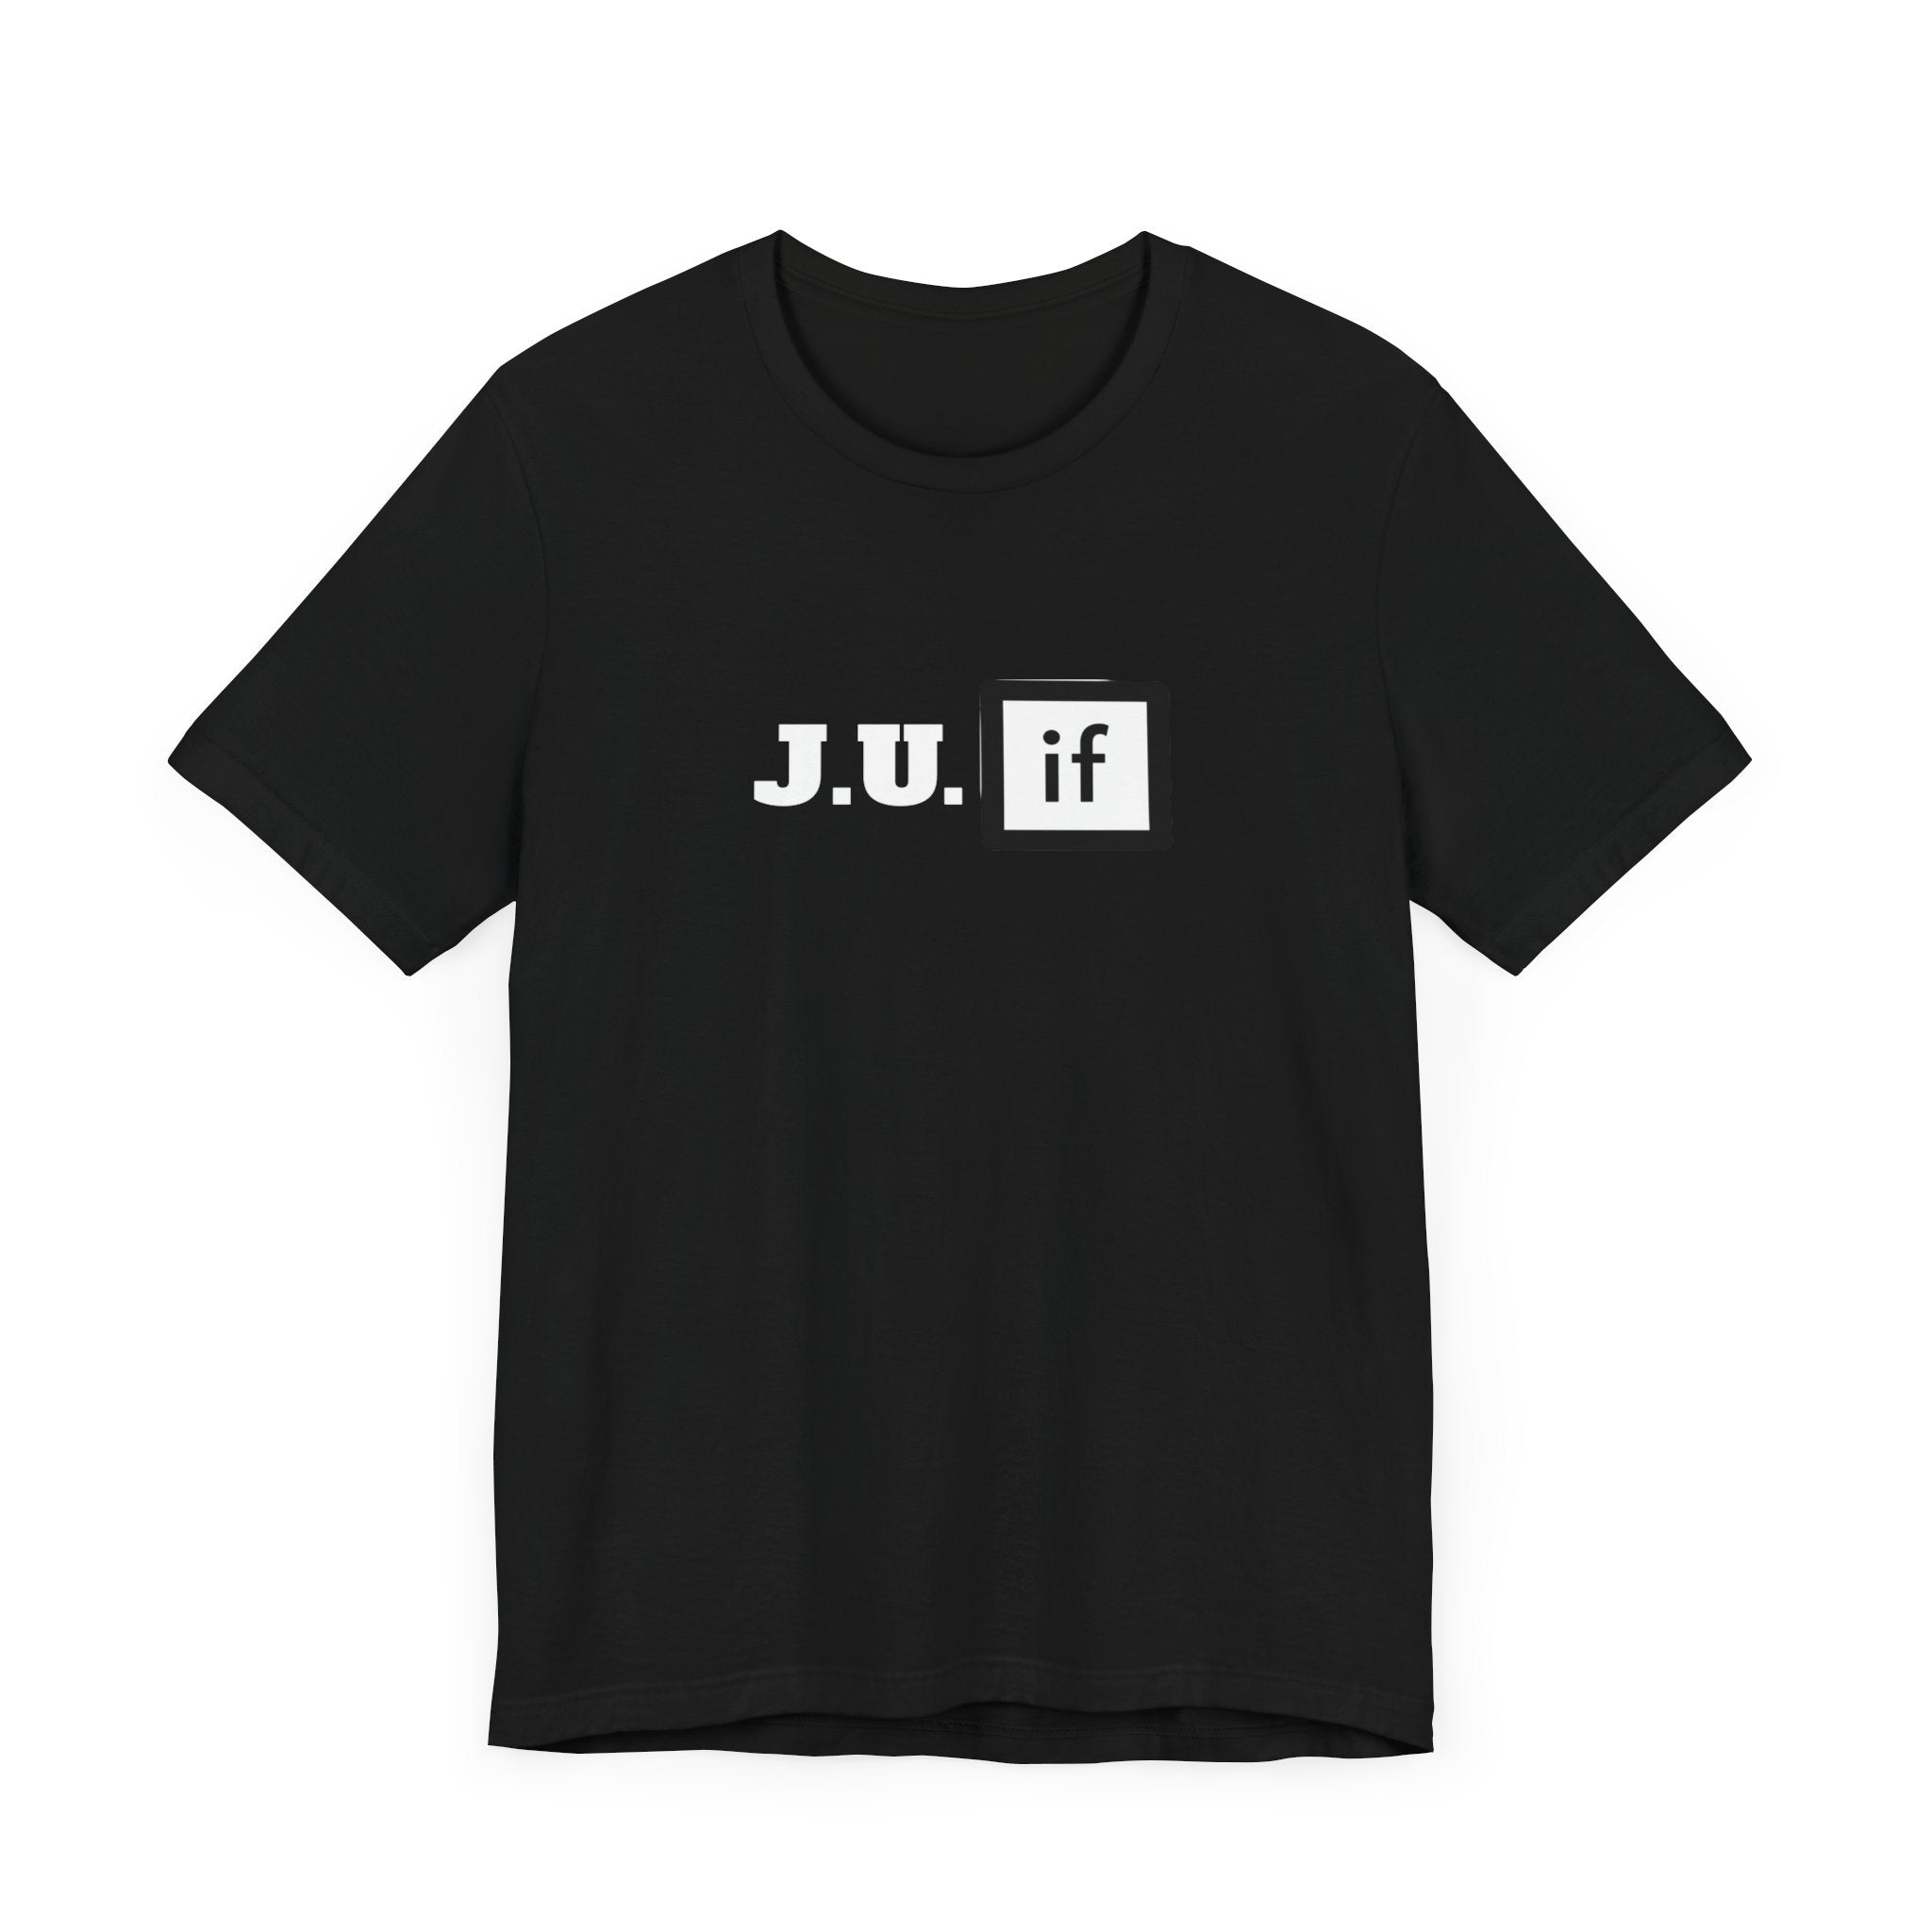 J.U.  if? Unisex Short Sleeve Tee - gottogetit prod.